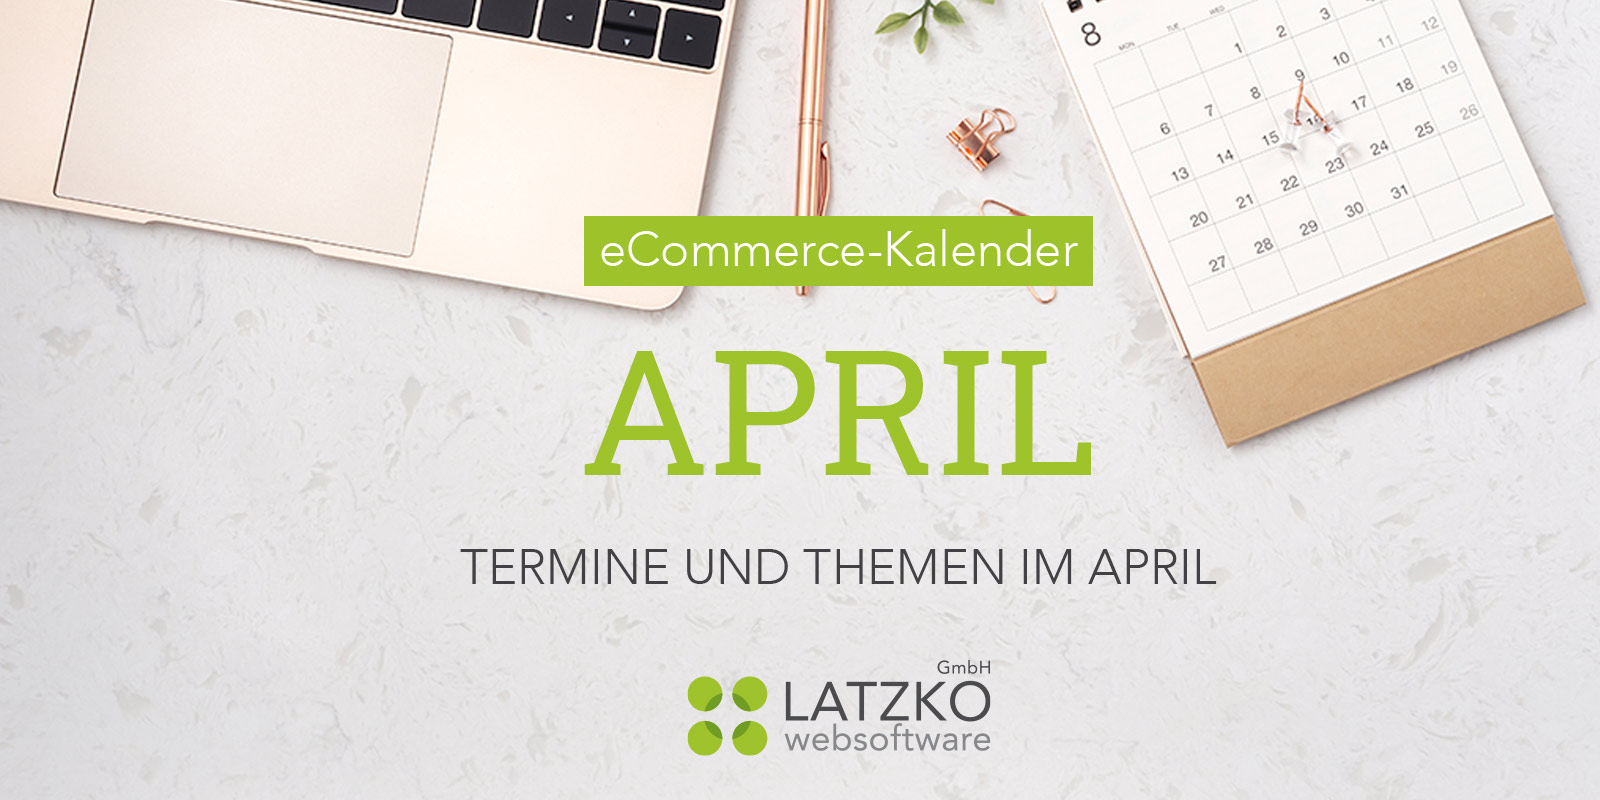 eCommerce-Kalender / April 2021